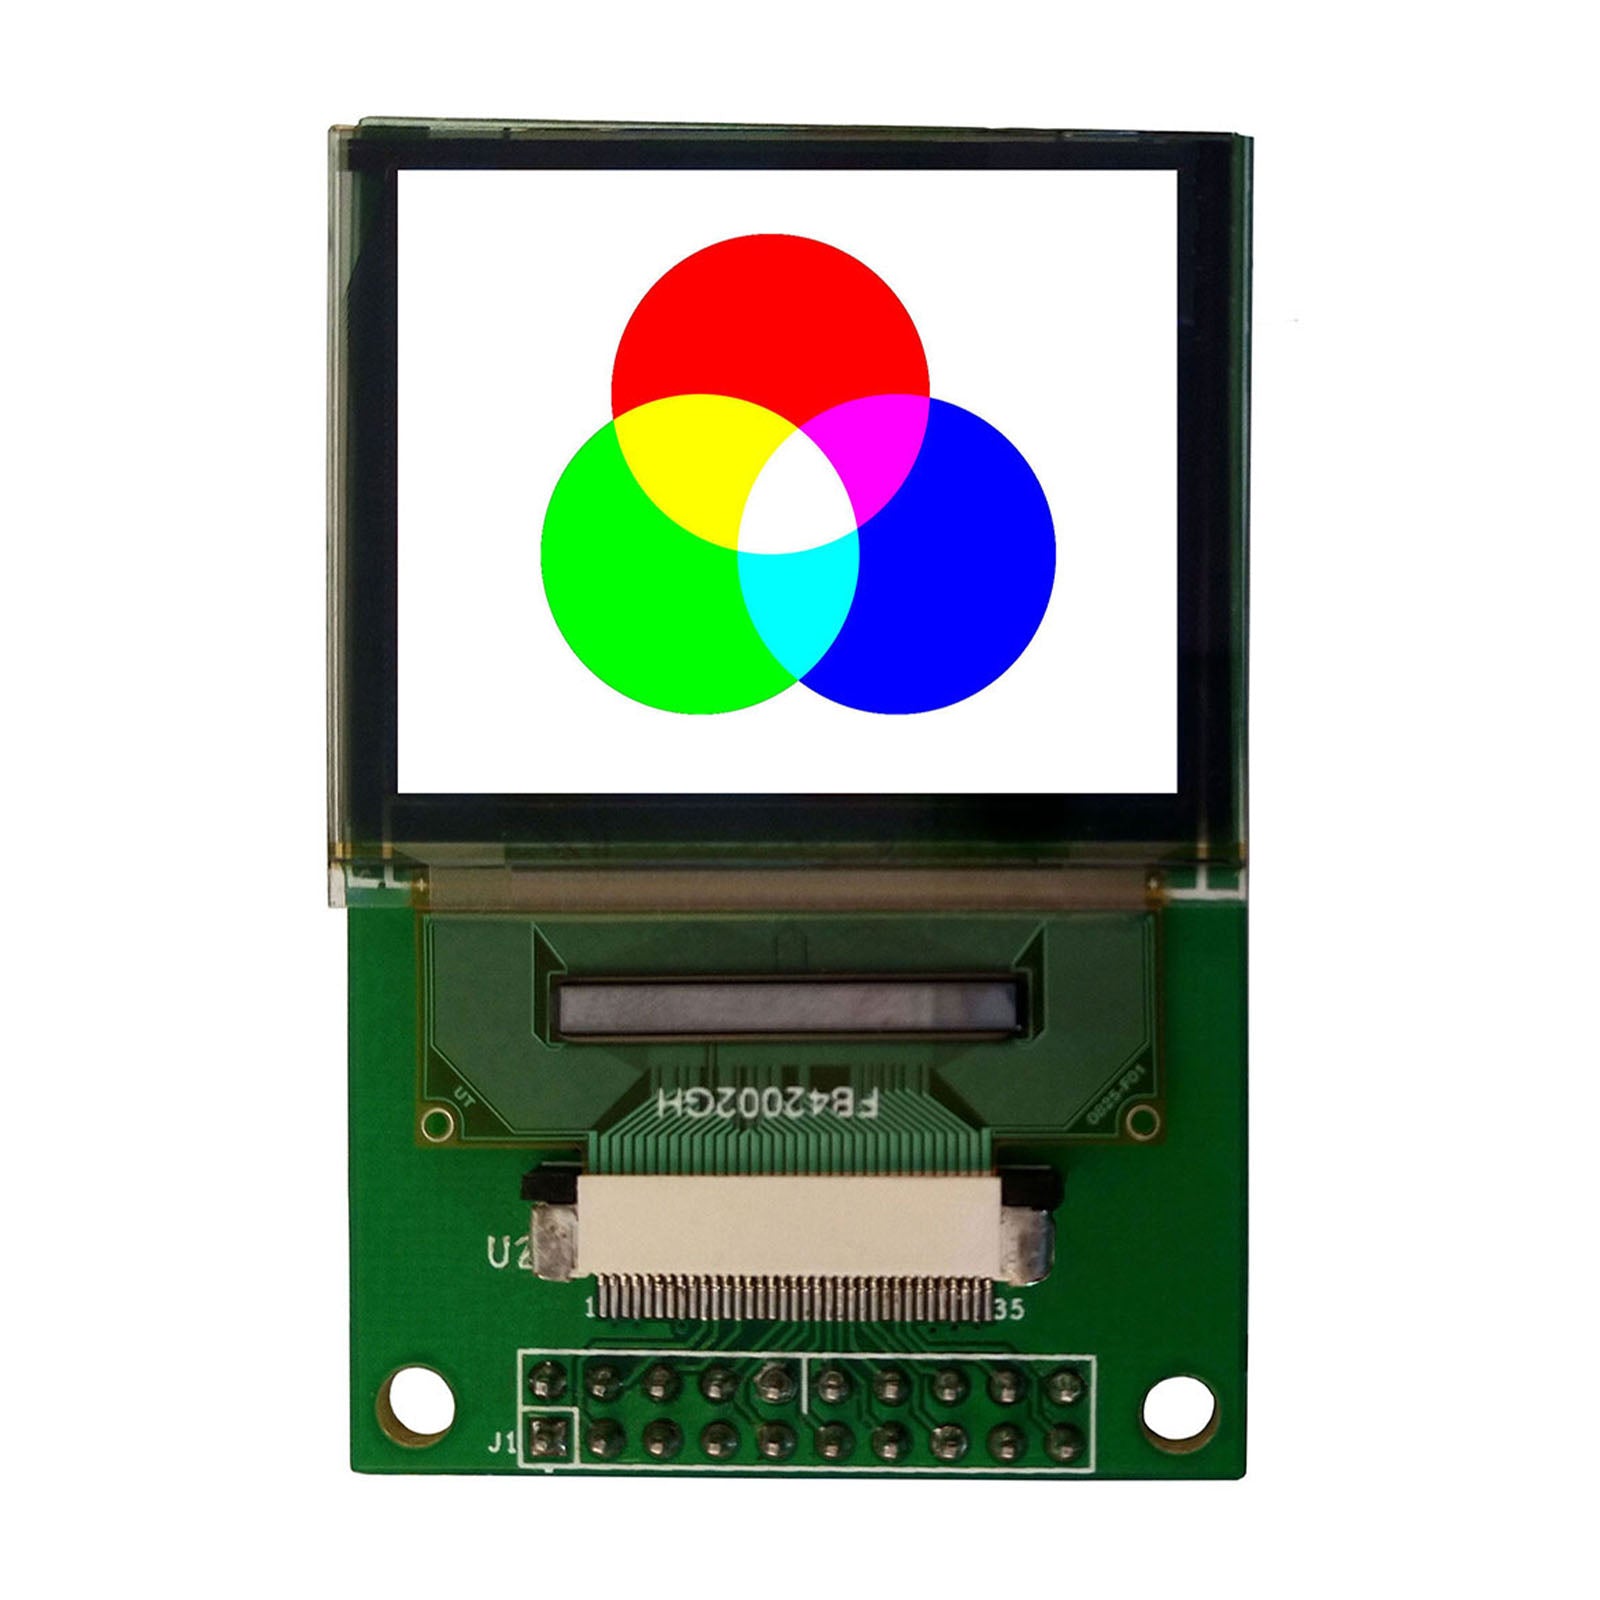 DisplayModule 1.69" 160x128 RGB Color OLED Display Module - MCU, SPI